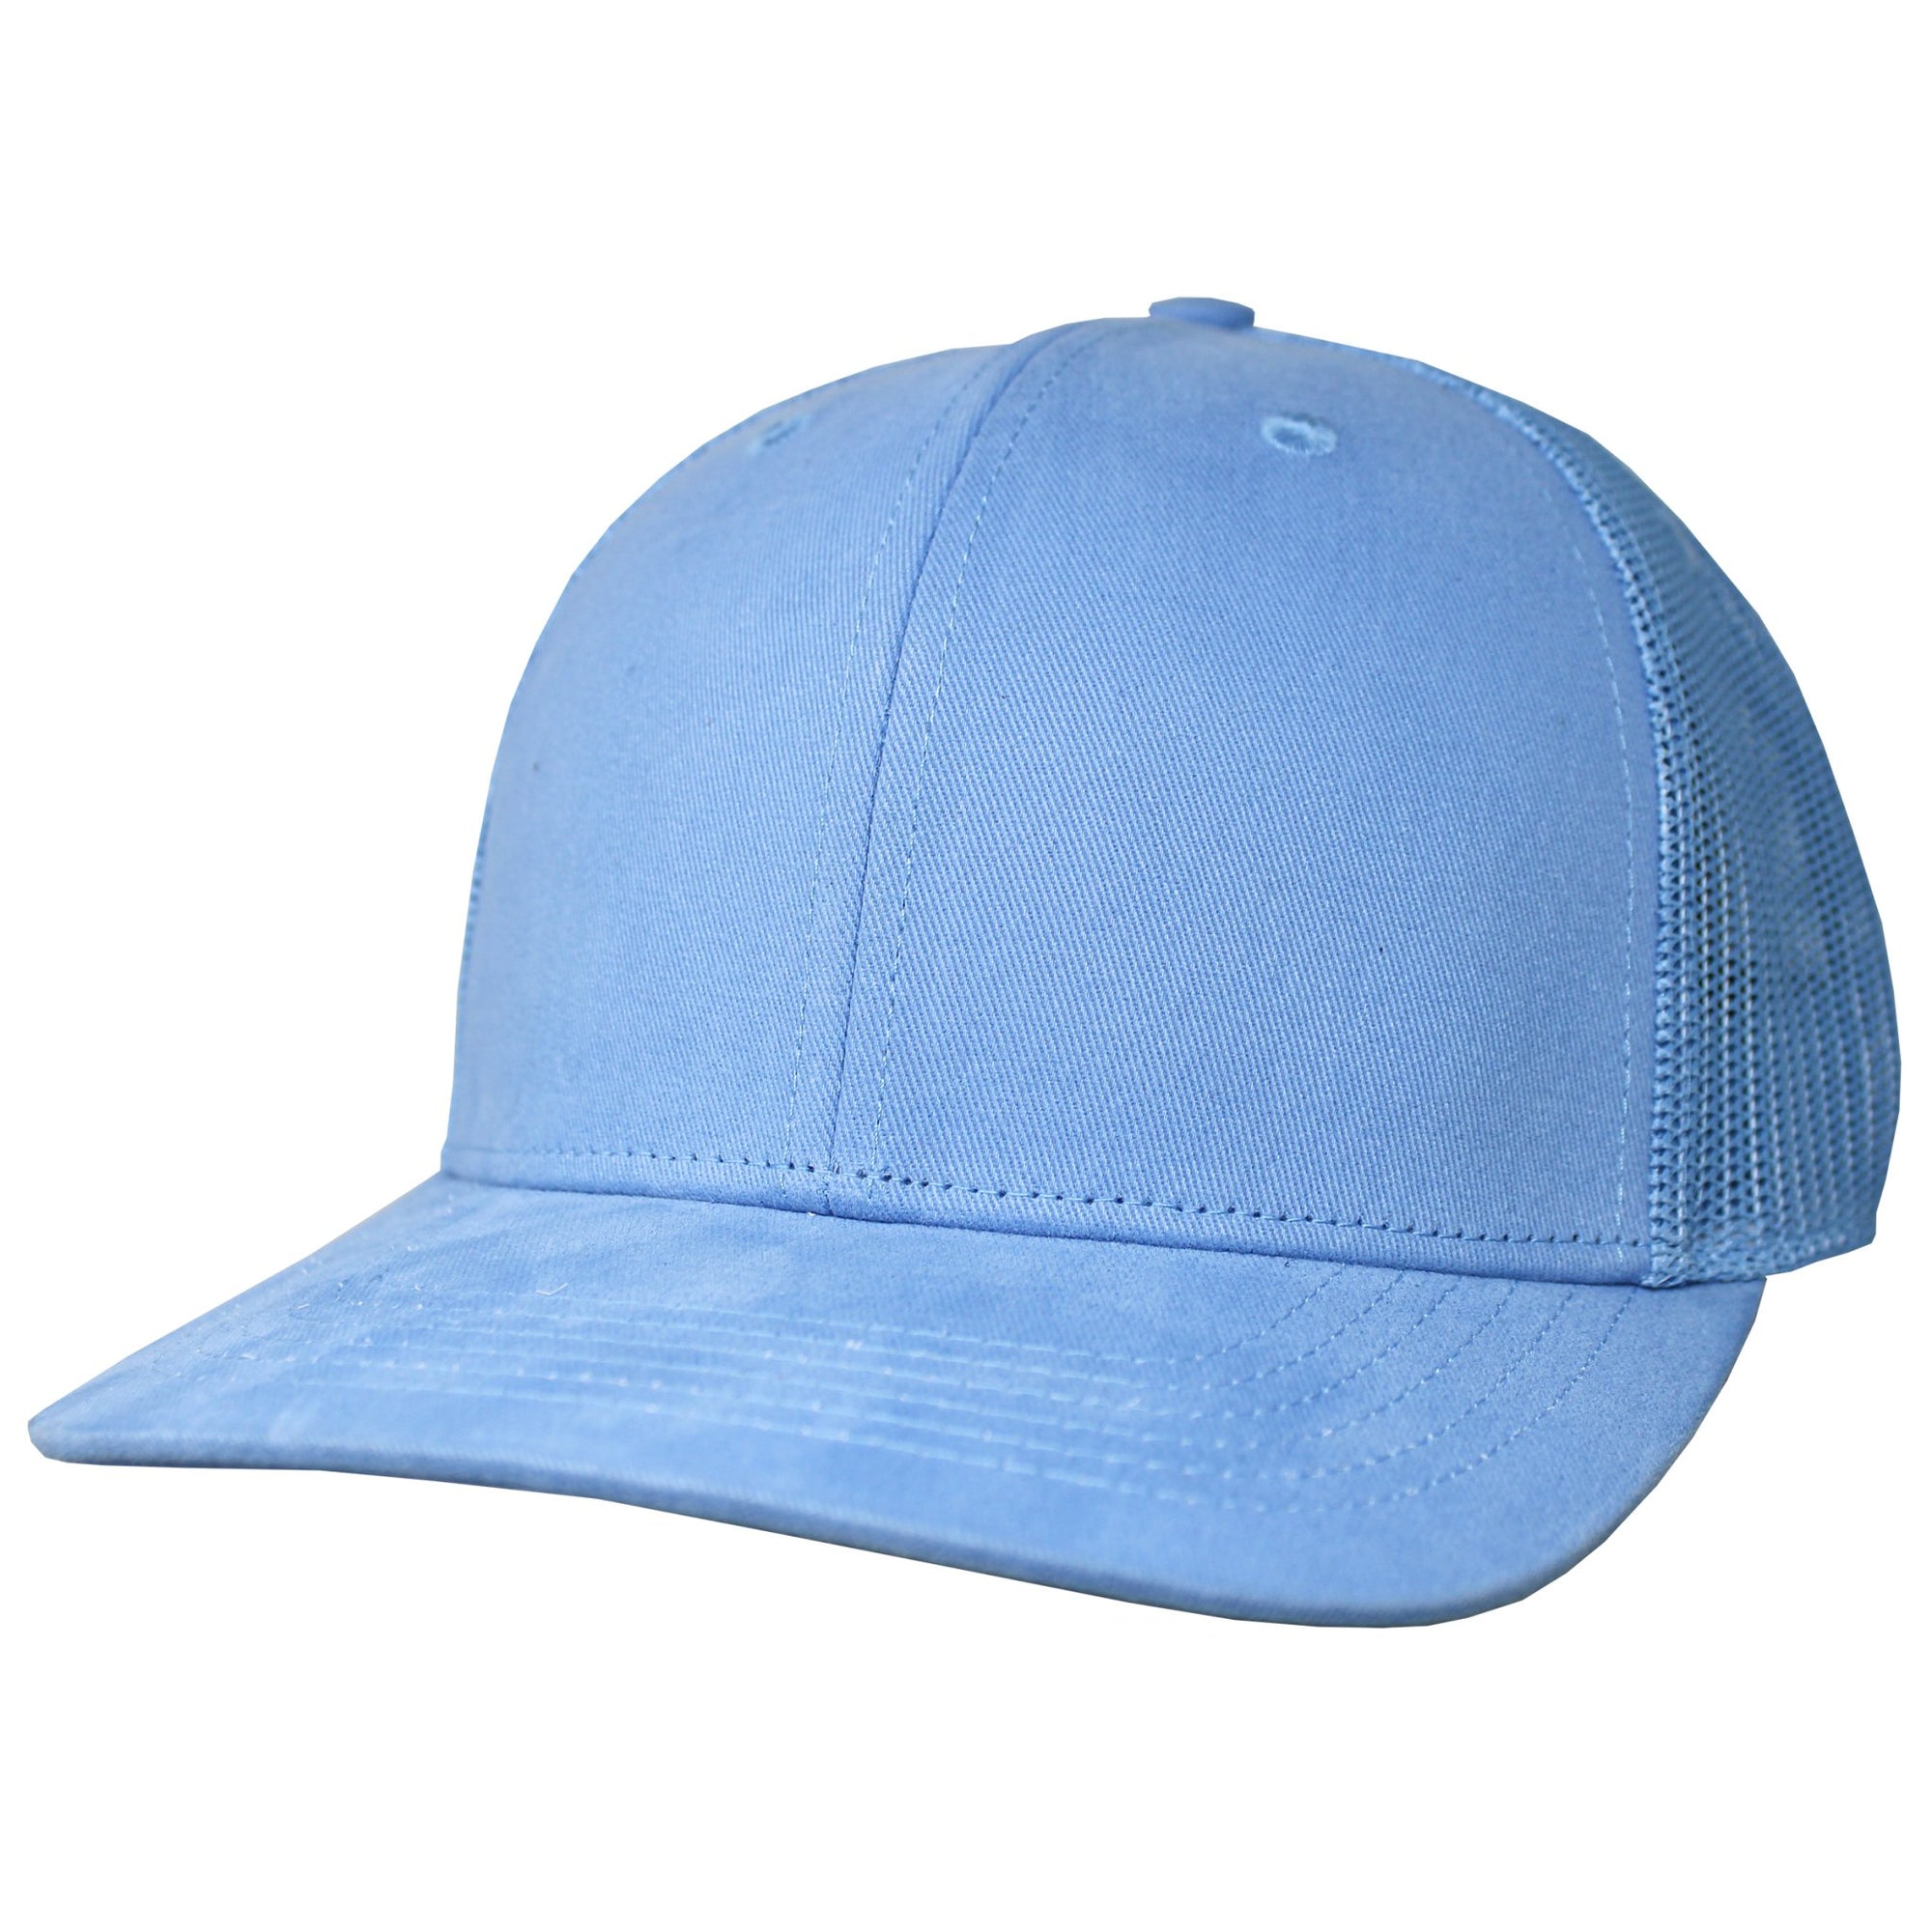 Blank Headwear - BC23 / 6 Panel Performance Trucker Cap - Carolina Blue / Carolina Blue - Black Cat MFG - Hat